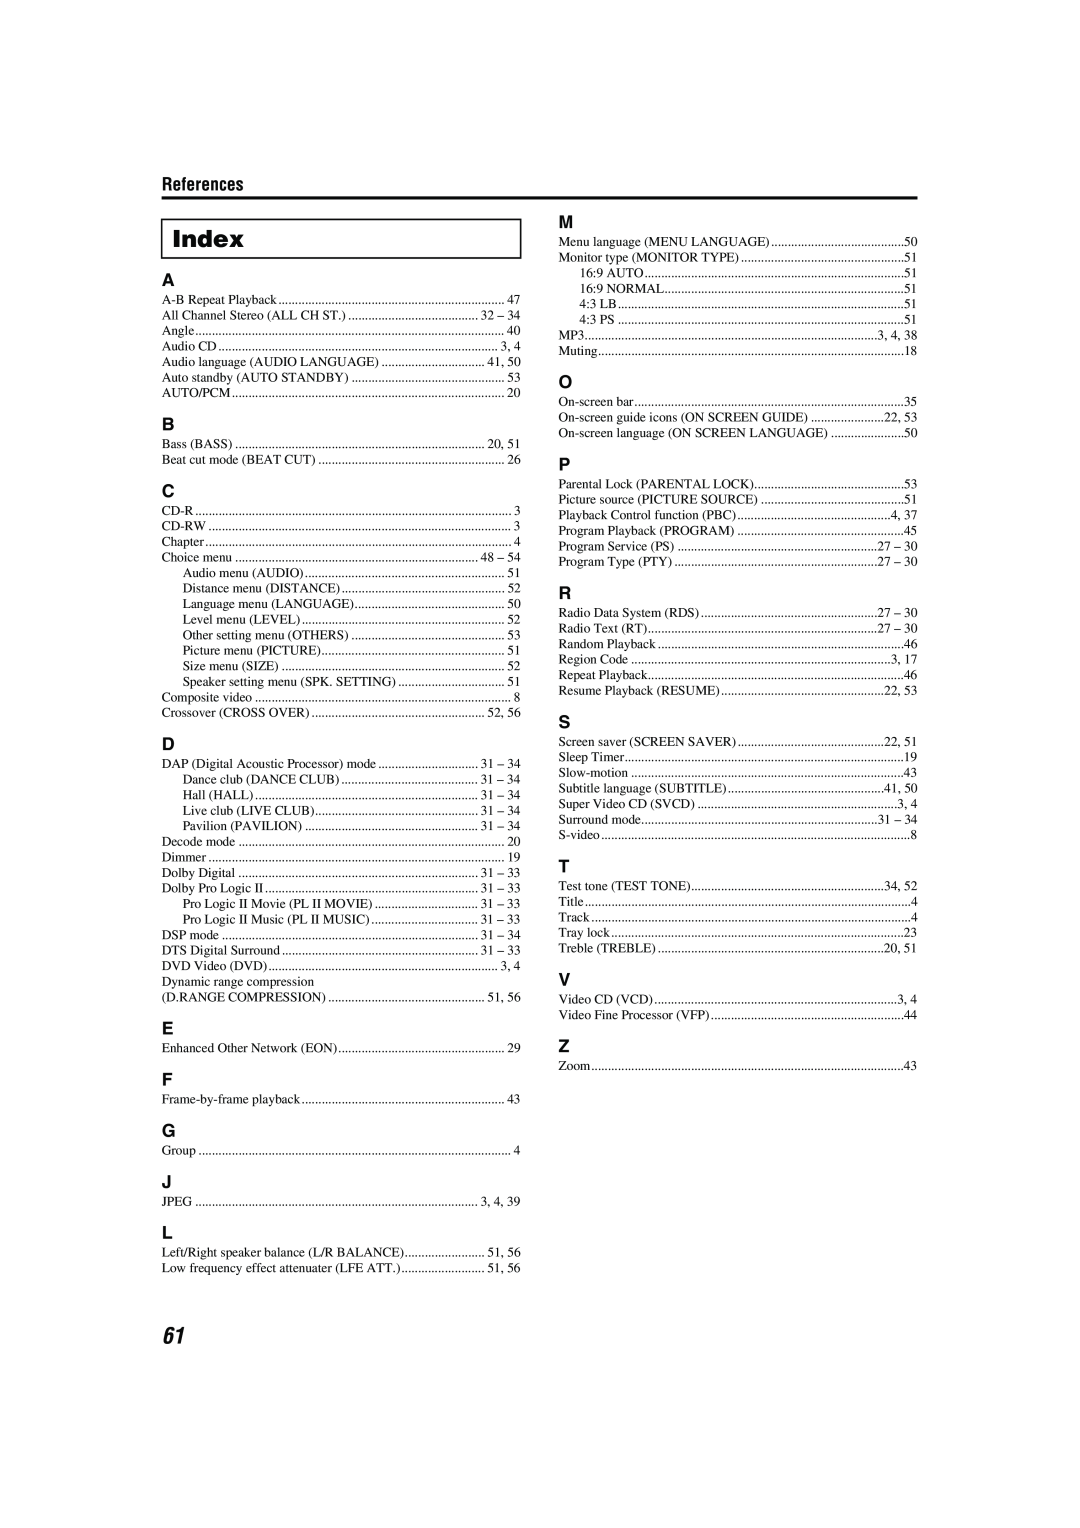 JVC M45 manual Index, References 